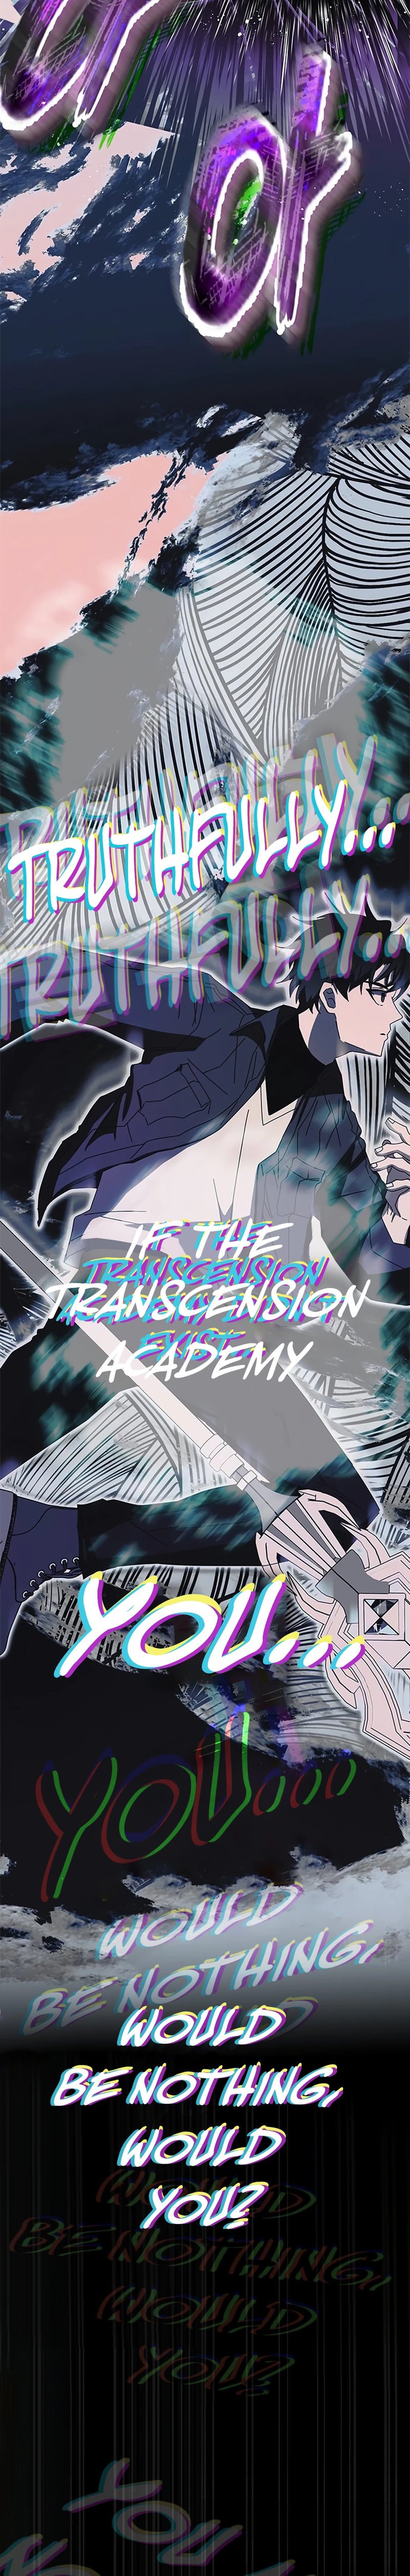 transcension-academy-chap-59-12